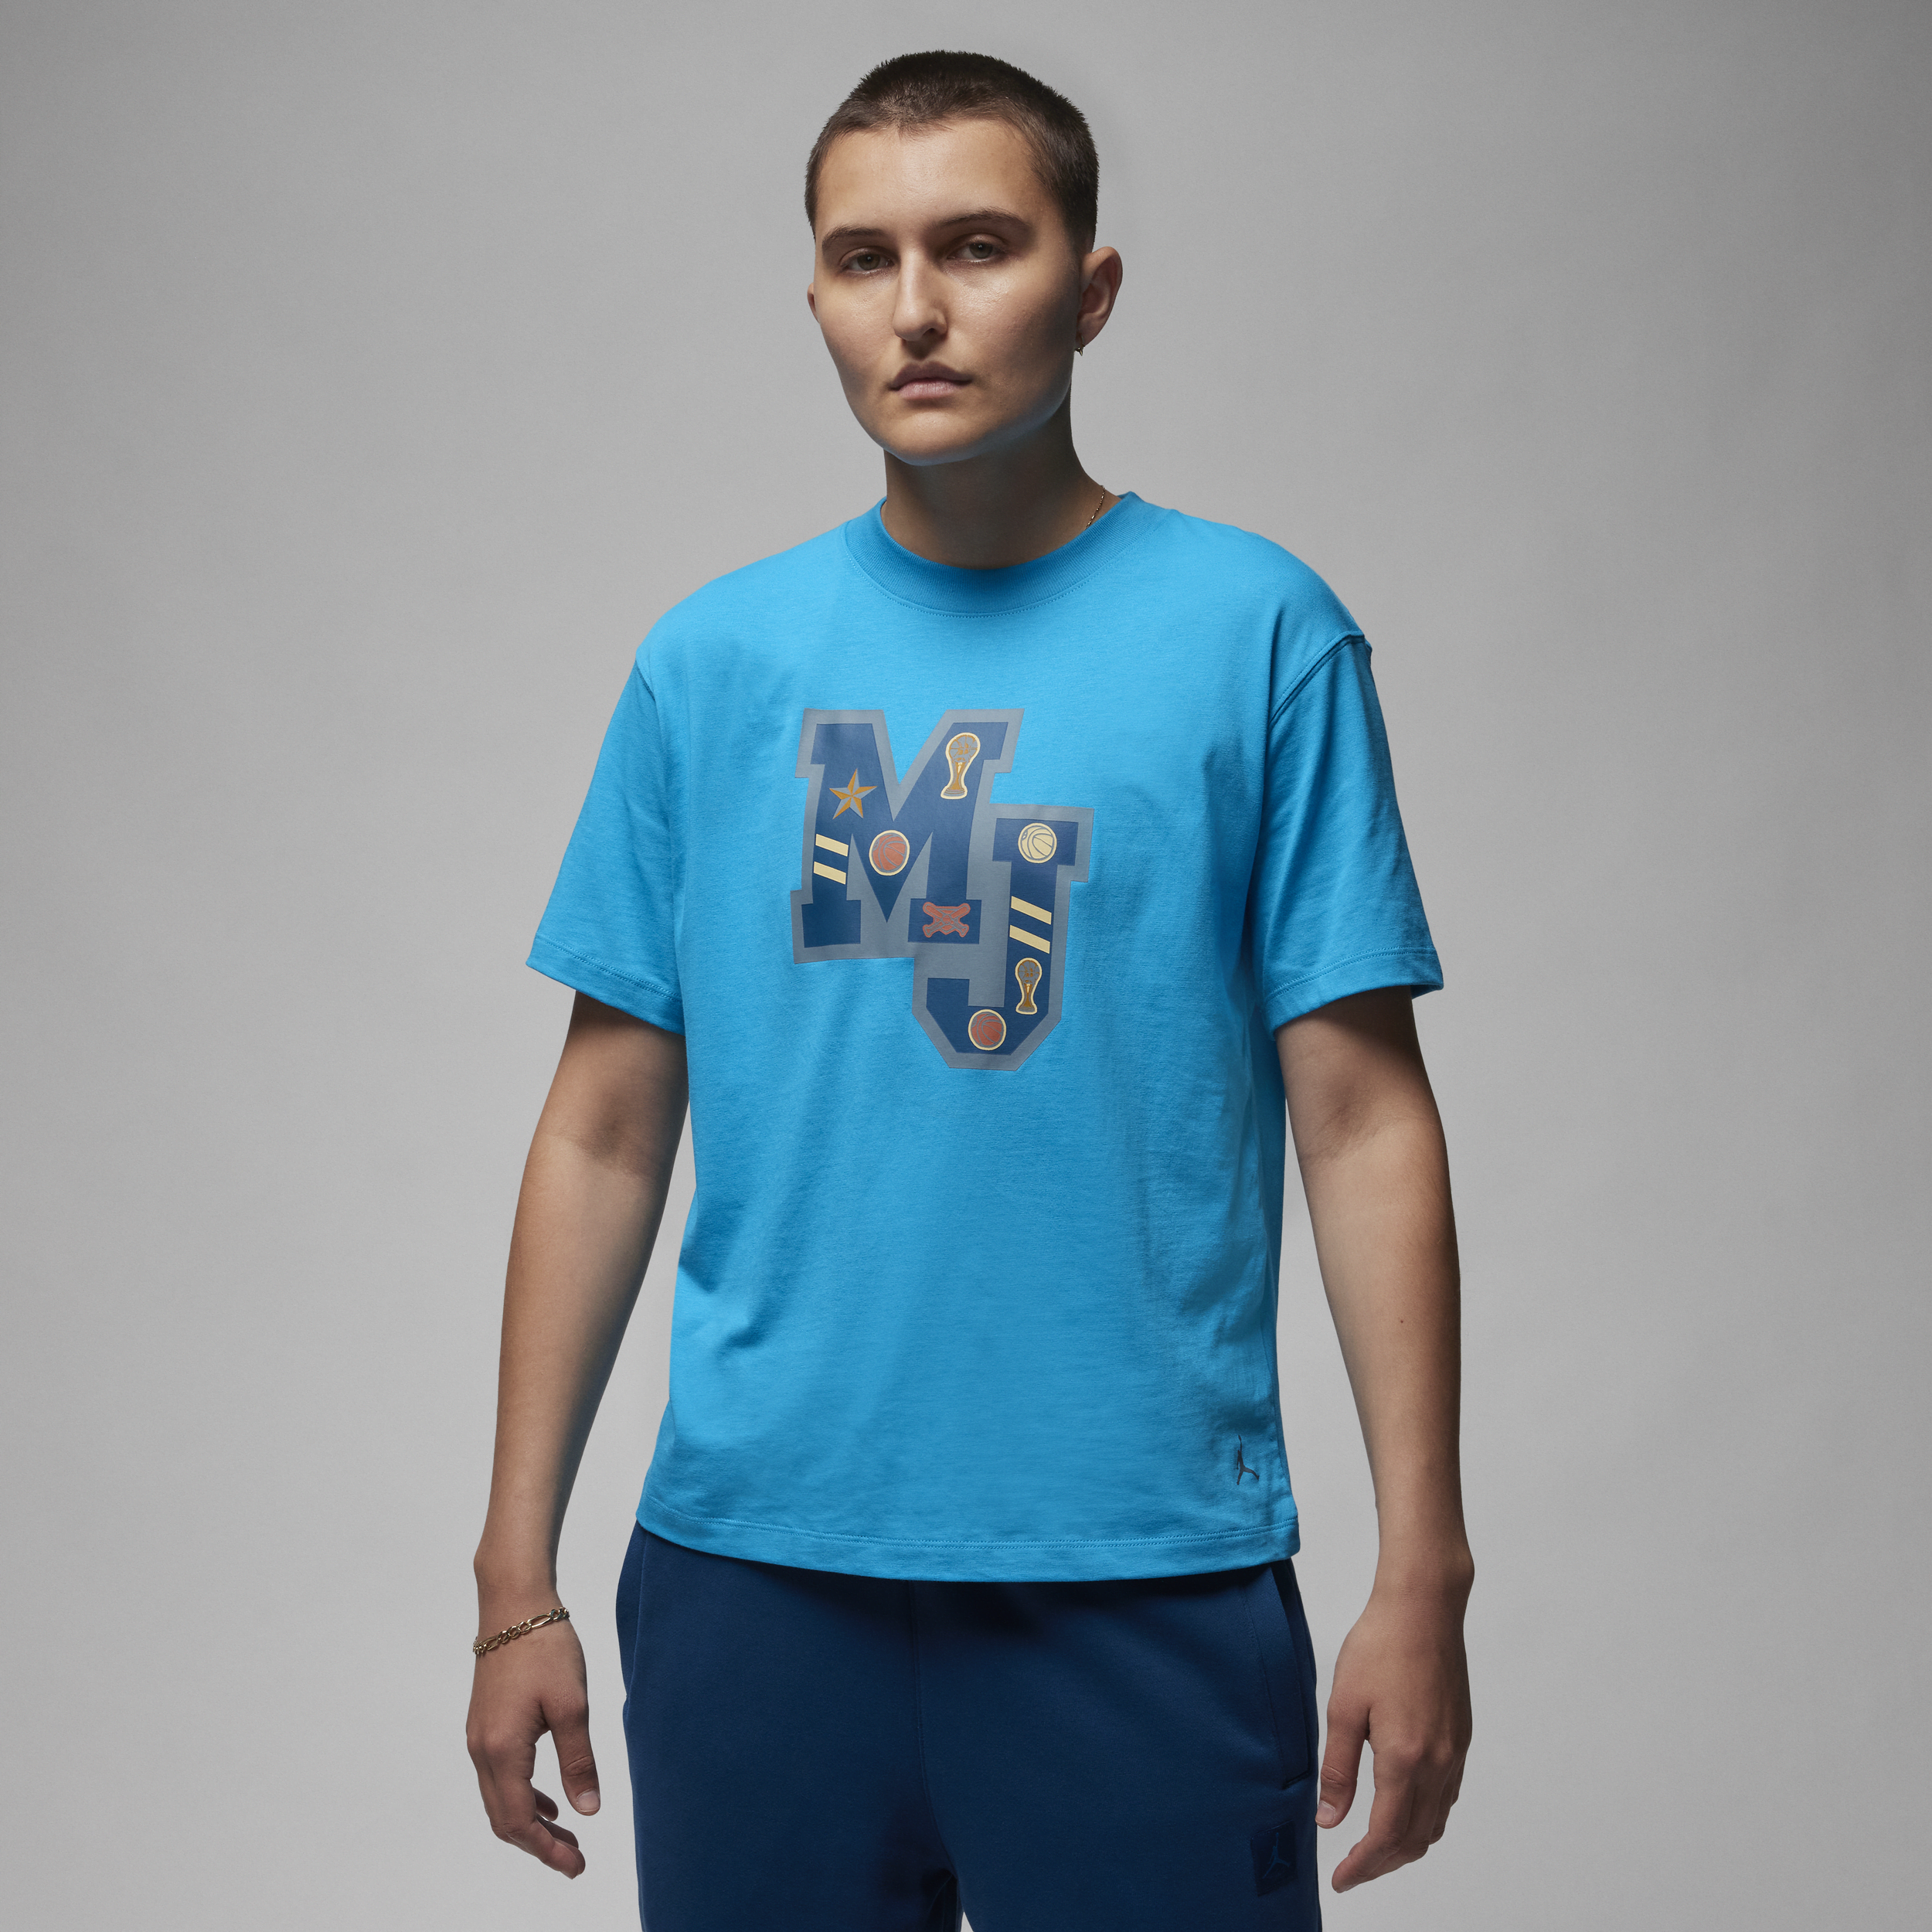 Nike T-shirt Girlfriend con grafica Jordan – Donna - Blu